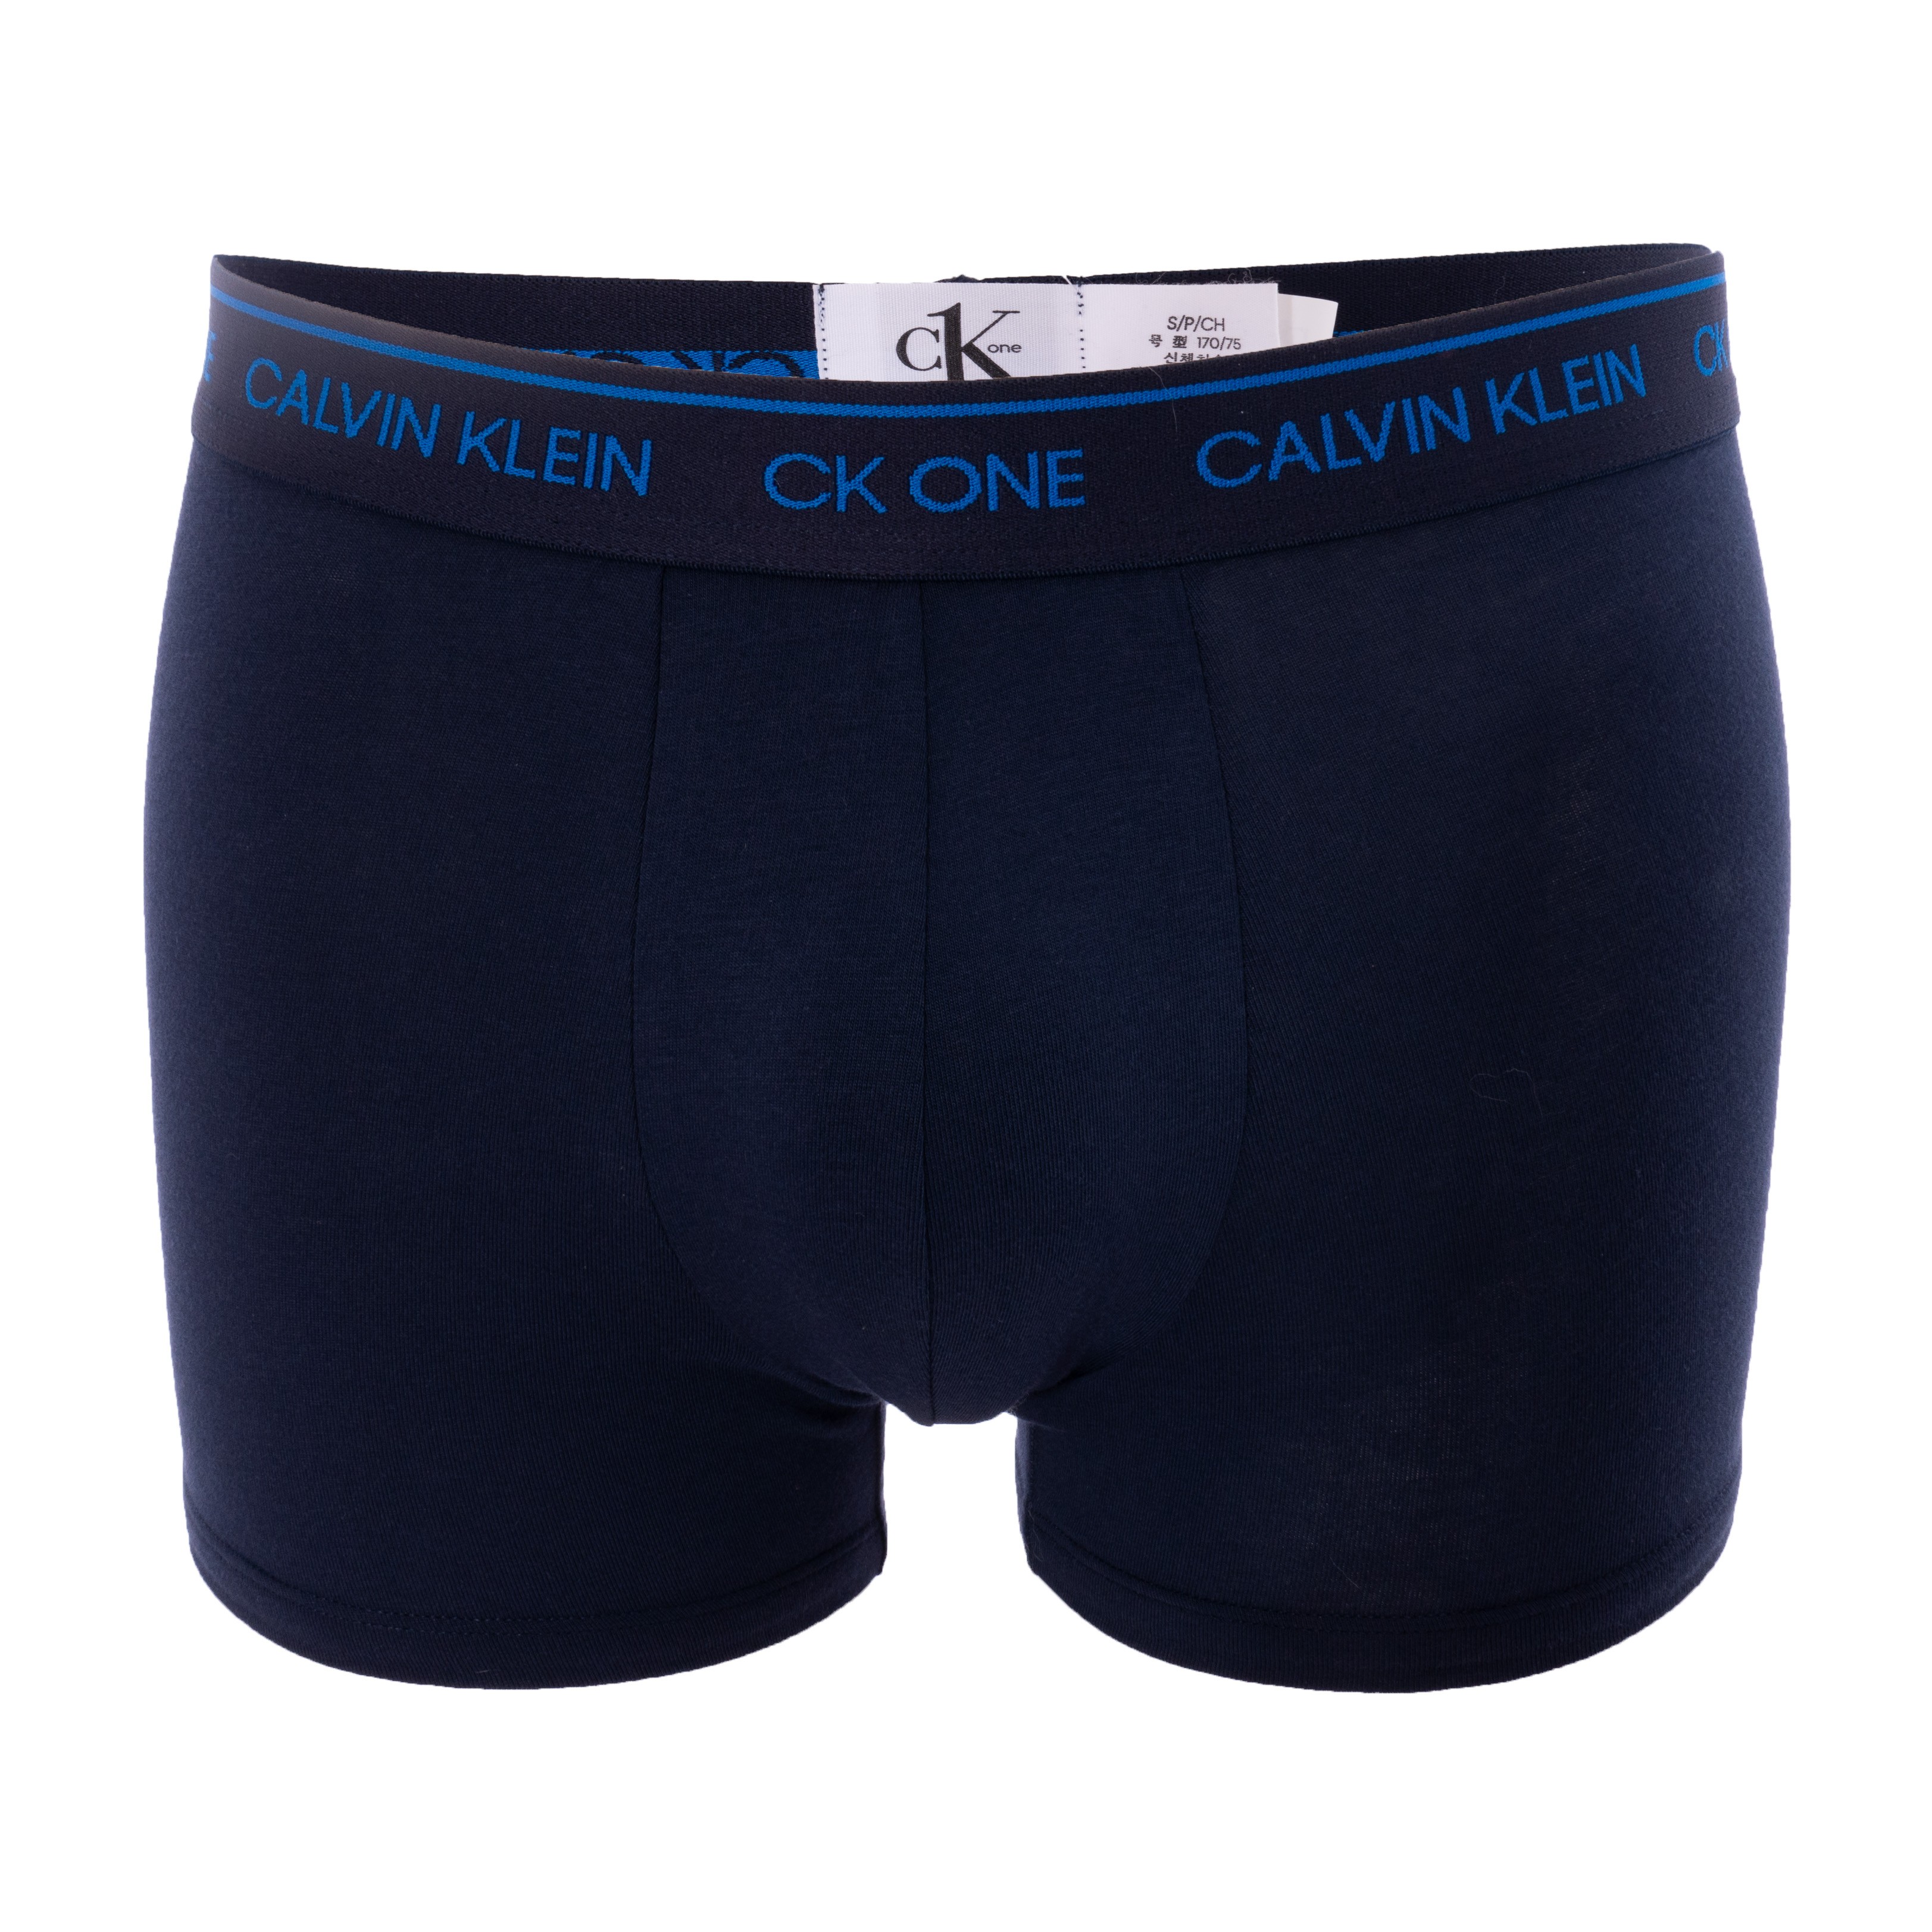 Boxer - CK ONE shoreline: Boxers for man brand Calvin Klein for sal